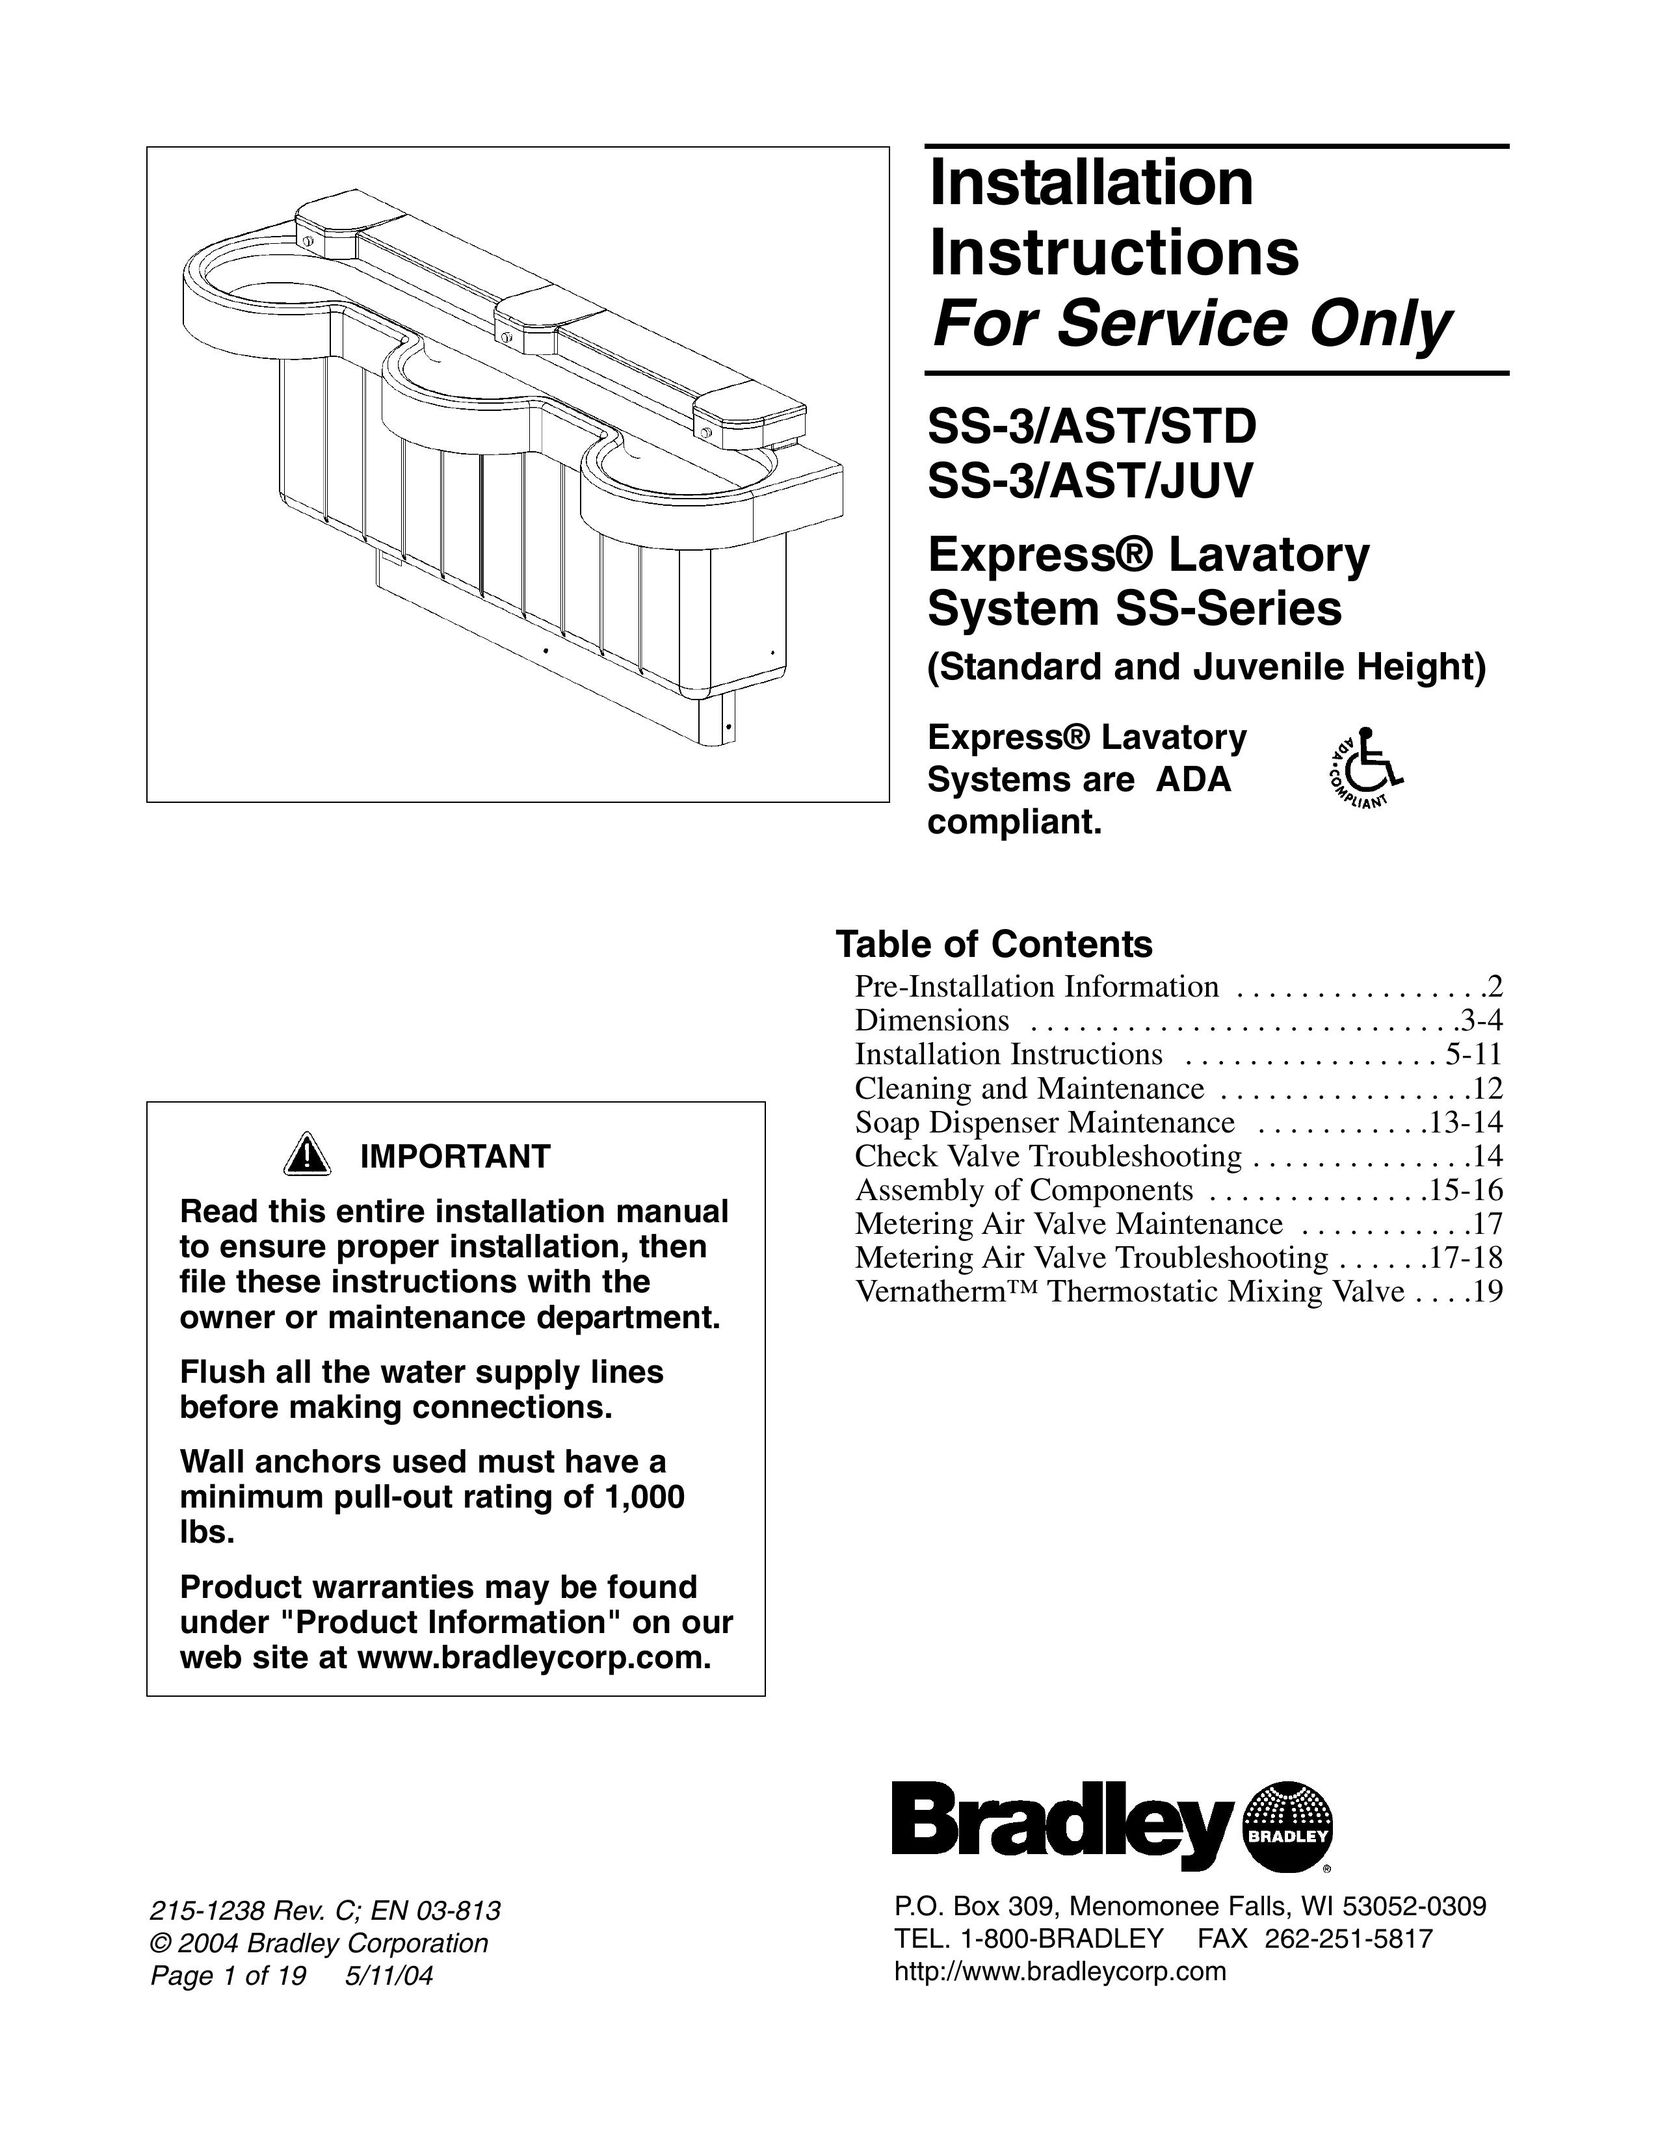 Bradley Smoker SS-3/AST/STD Plumbing Product User Manual